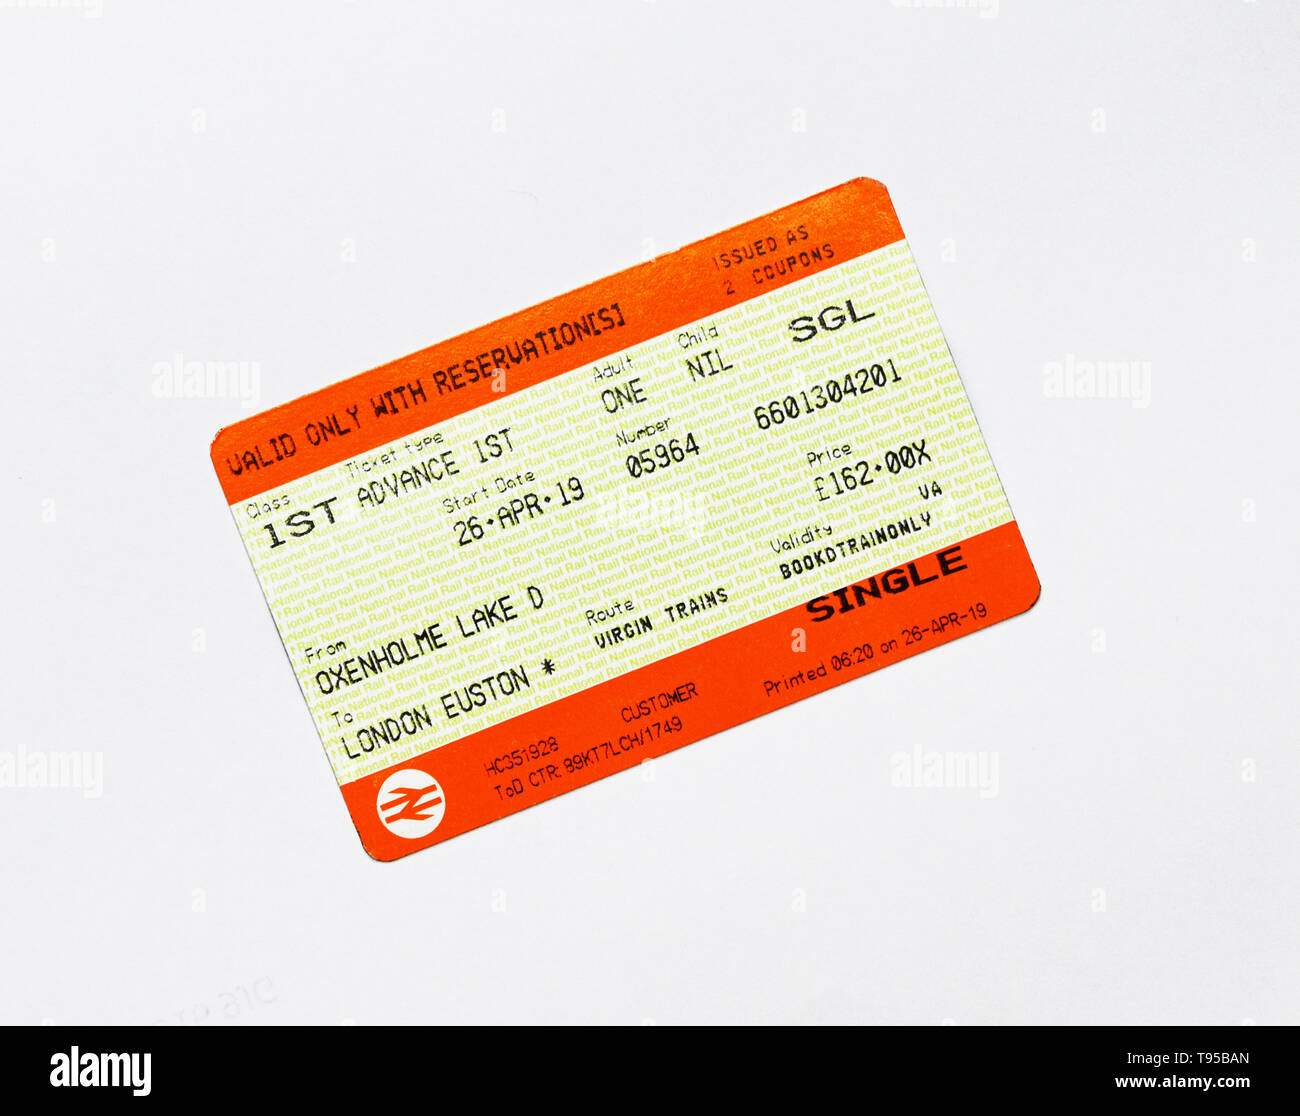 United Kingdom Train Ticket. Oxenholme Lake District to London Euston. 1st. Class. Adult. Advance 1st. Single. Virgin Trains. Price £162.00. Stock Photo